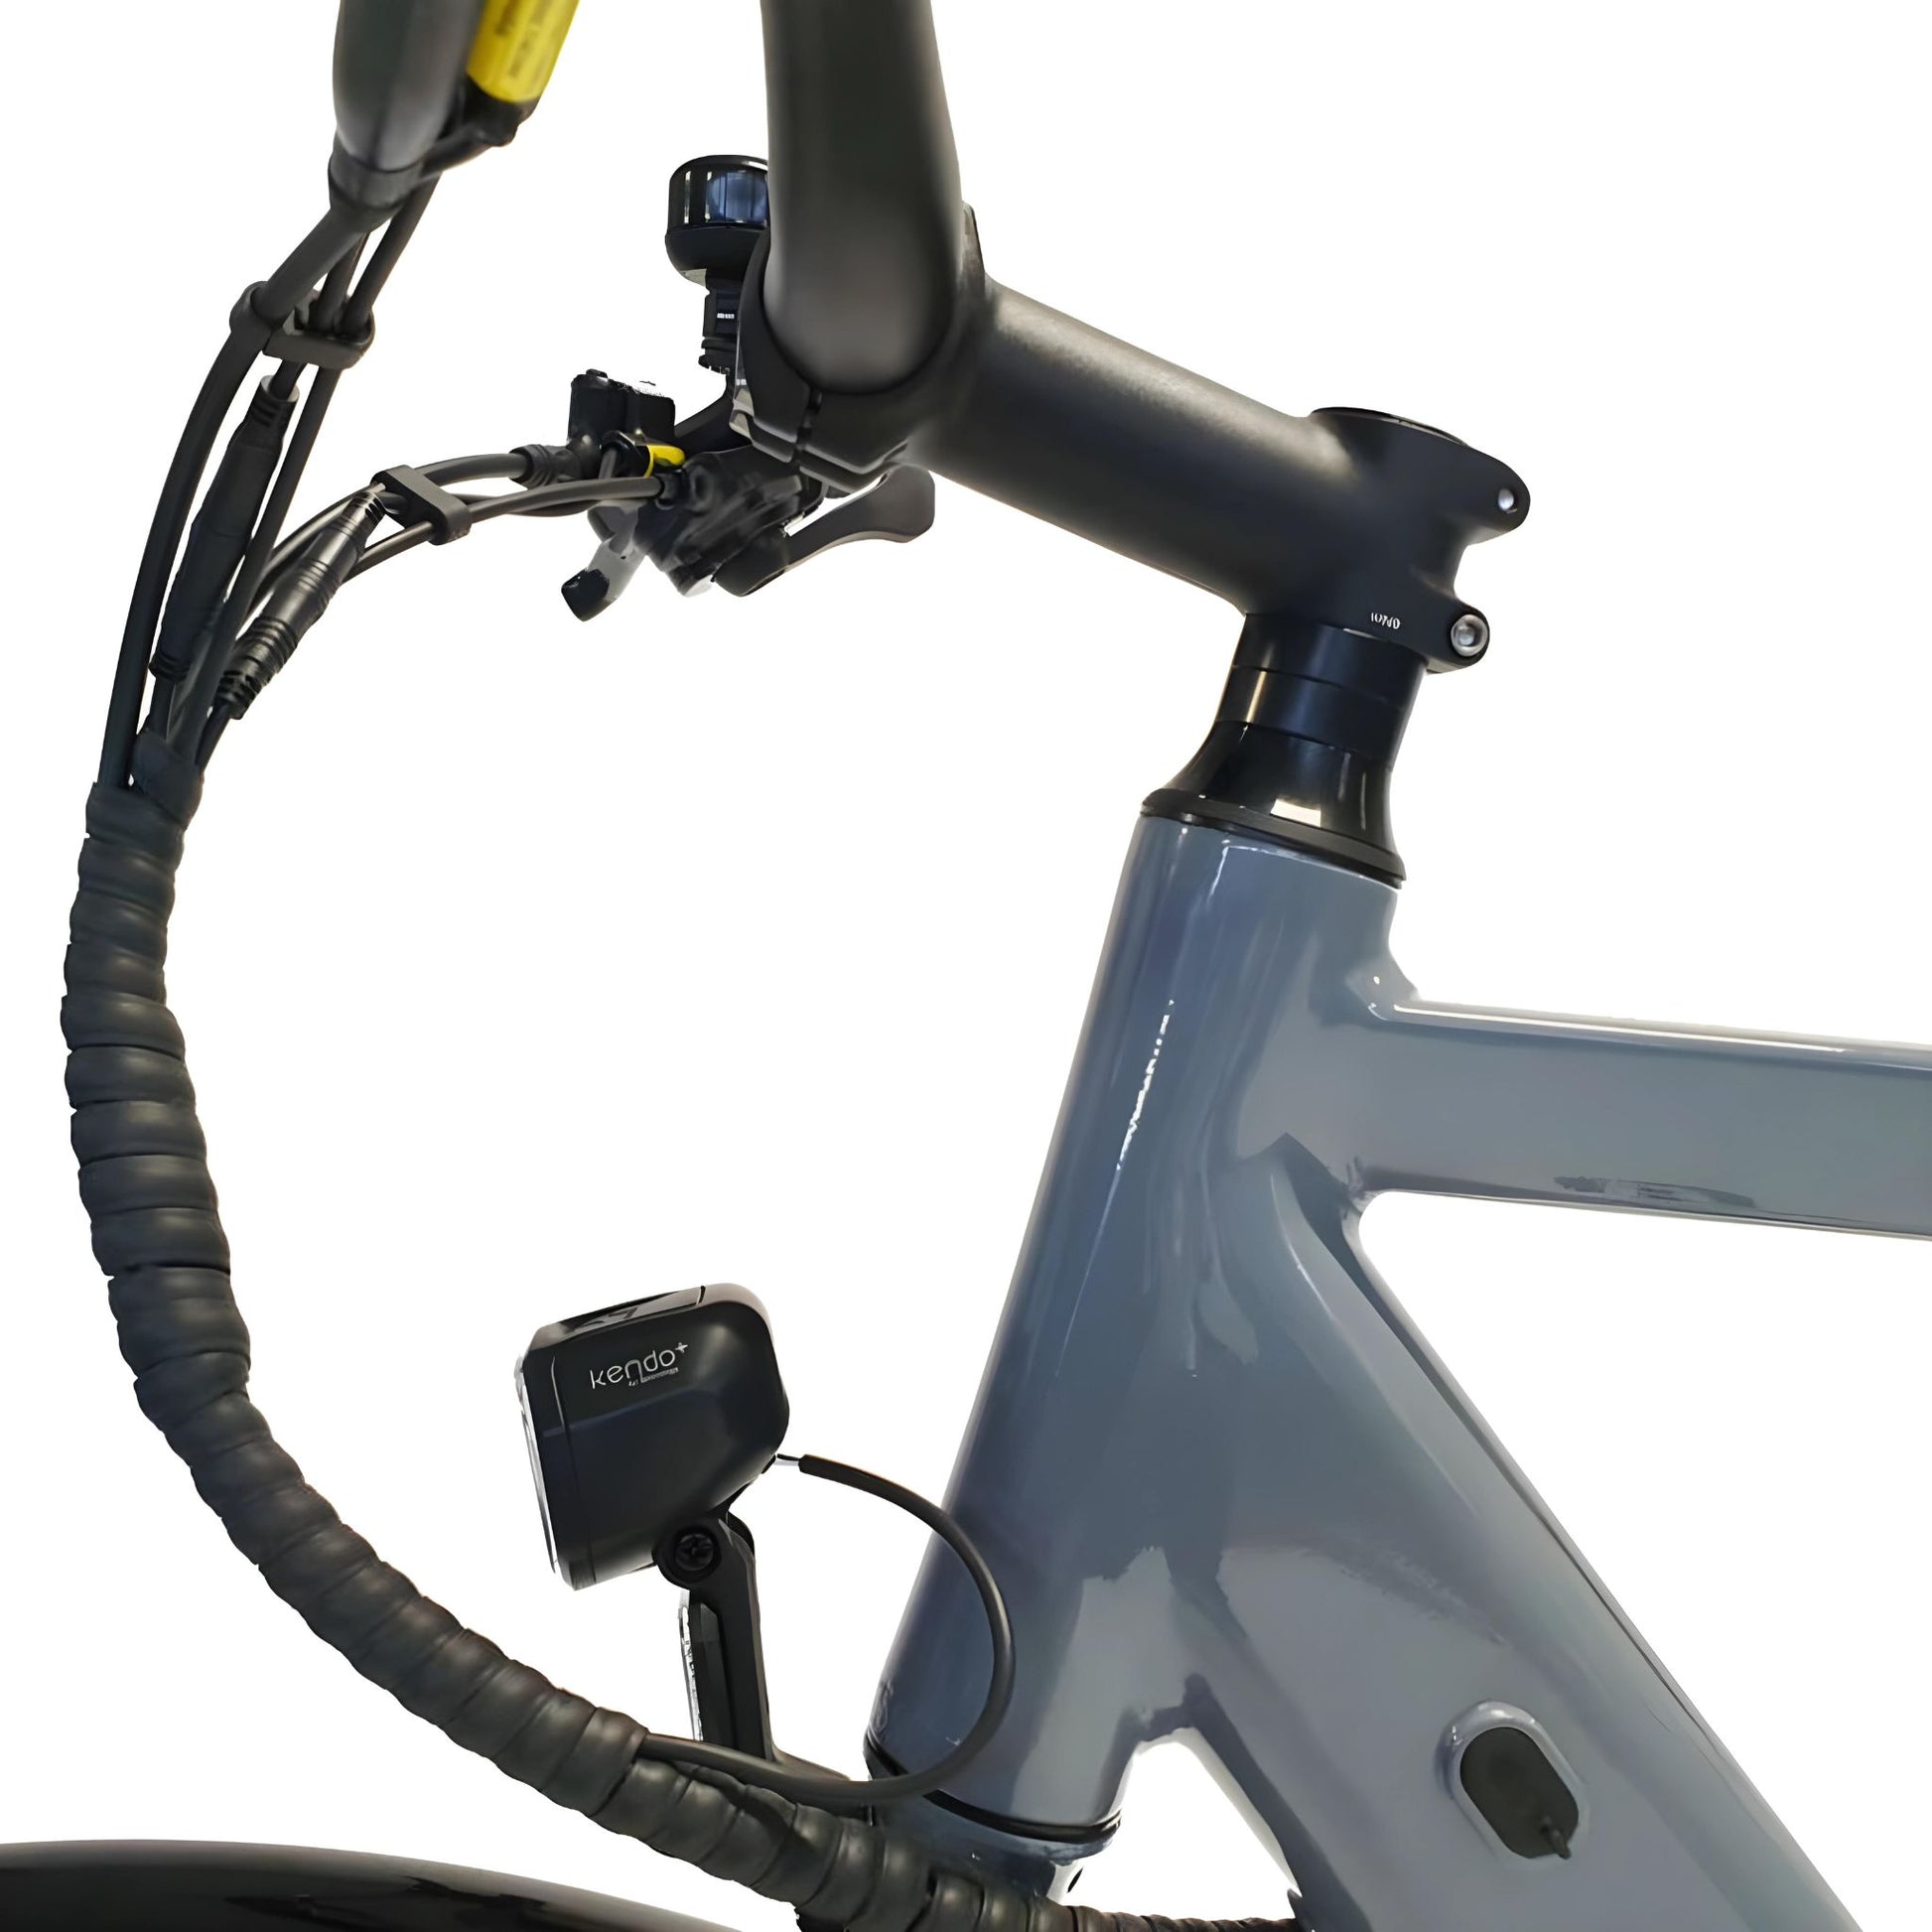 Control panel and grips of Geobike E-Urban e-bike handlebar